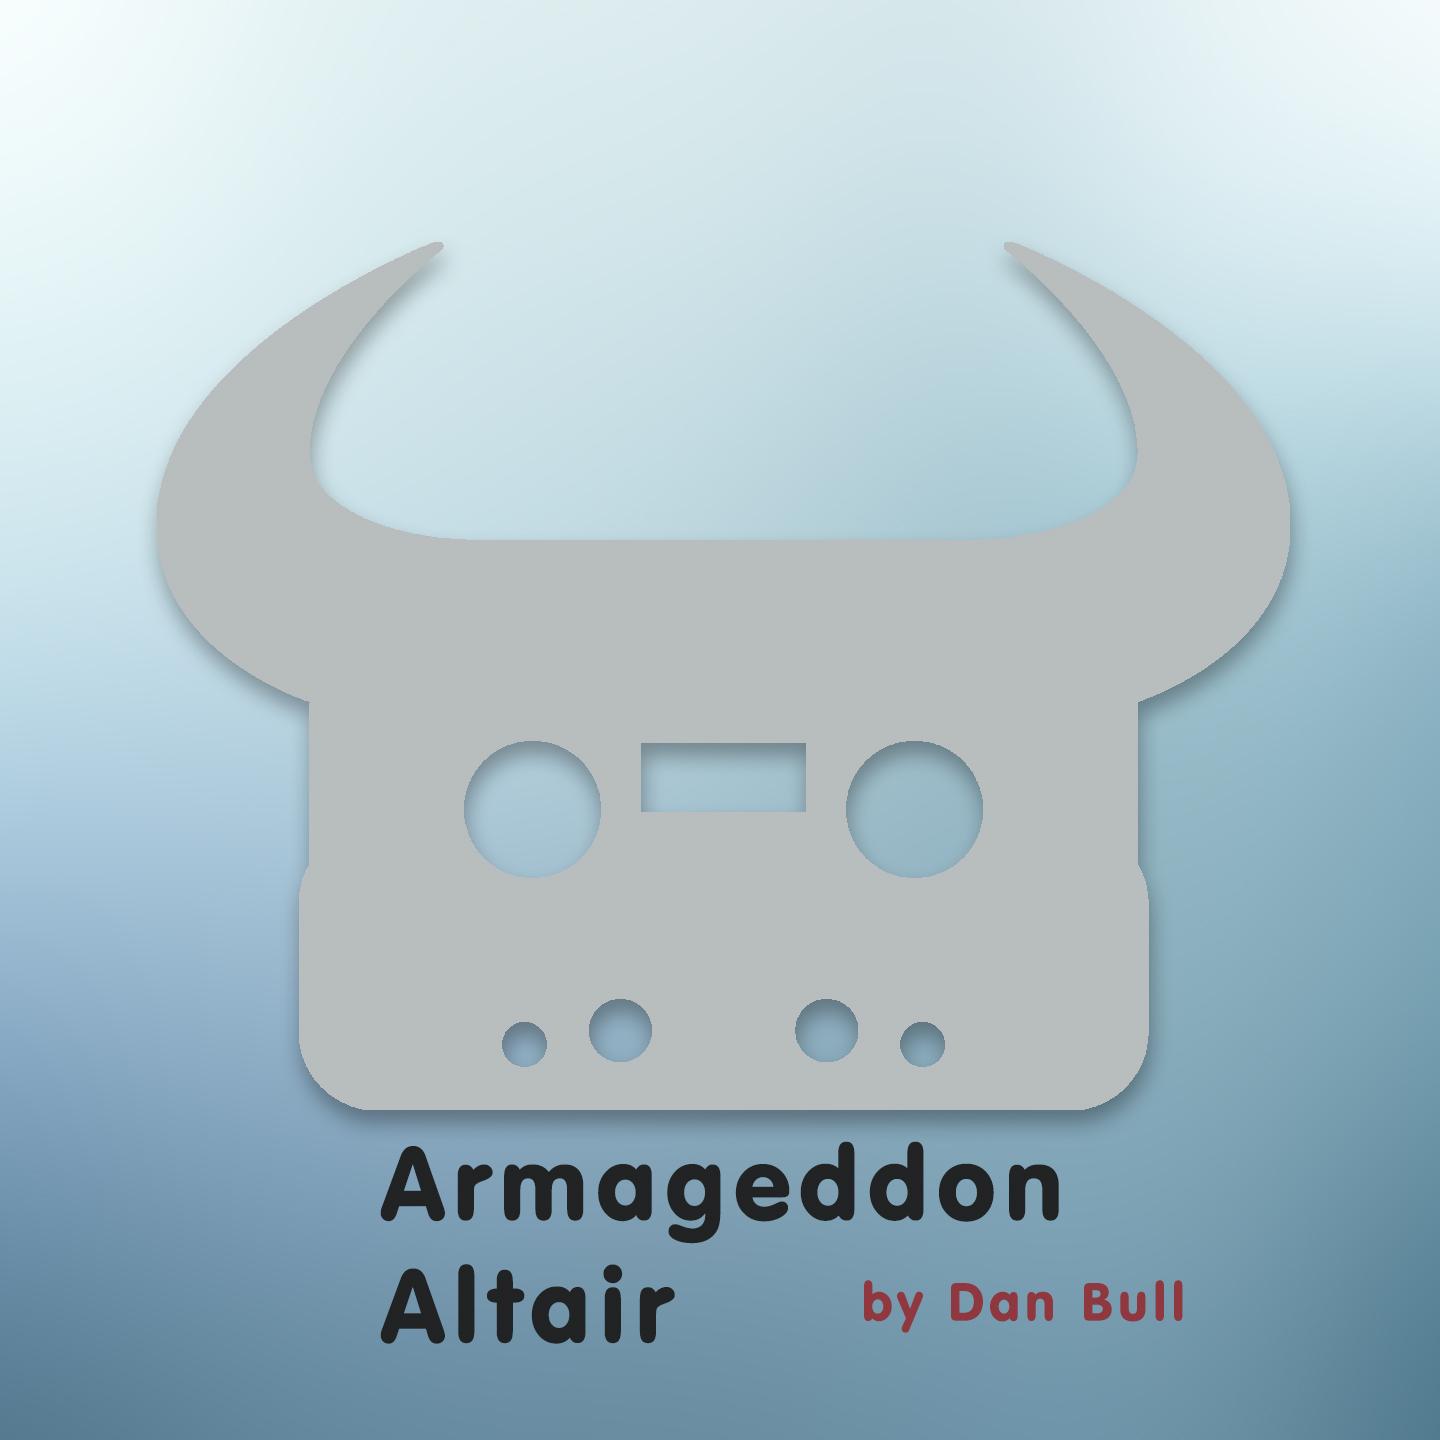 Armageddon Altair